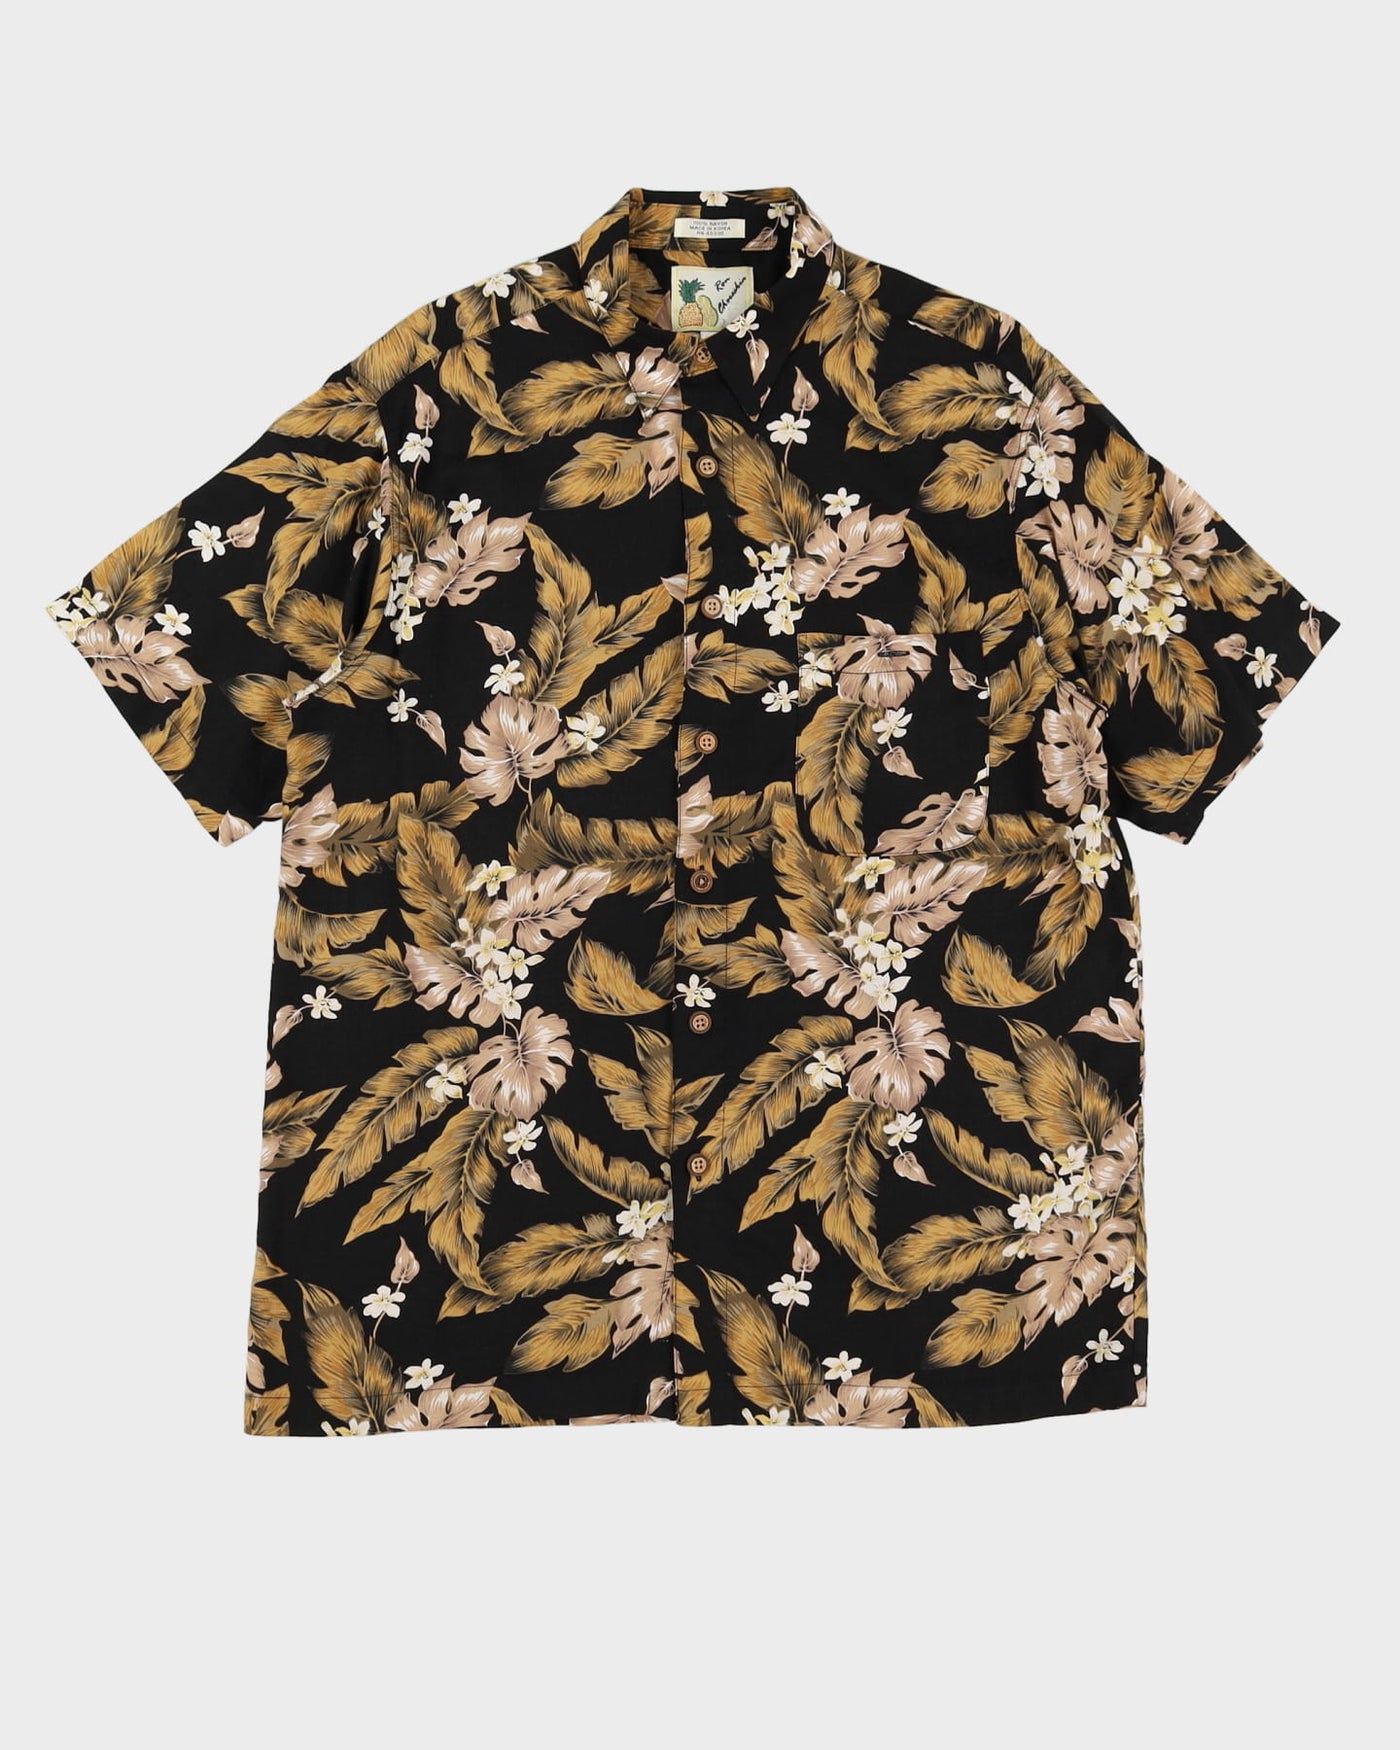 Black With Brown Flowers Hawaiian Shirt - L